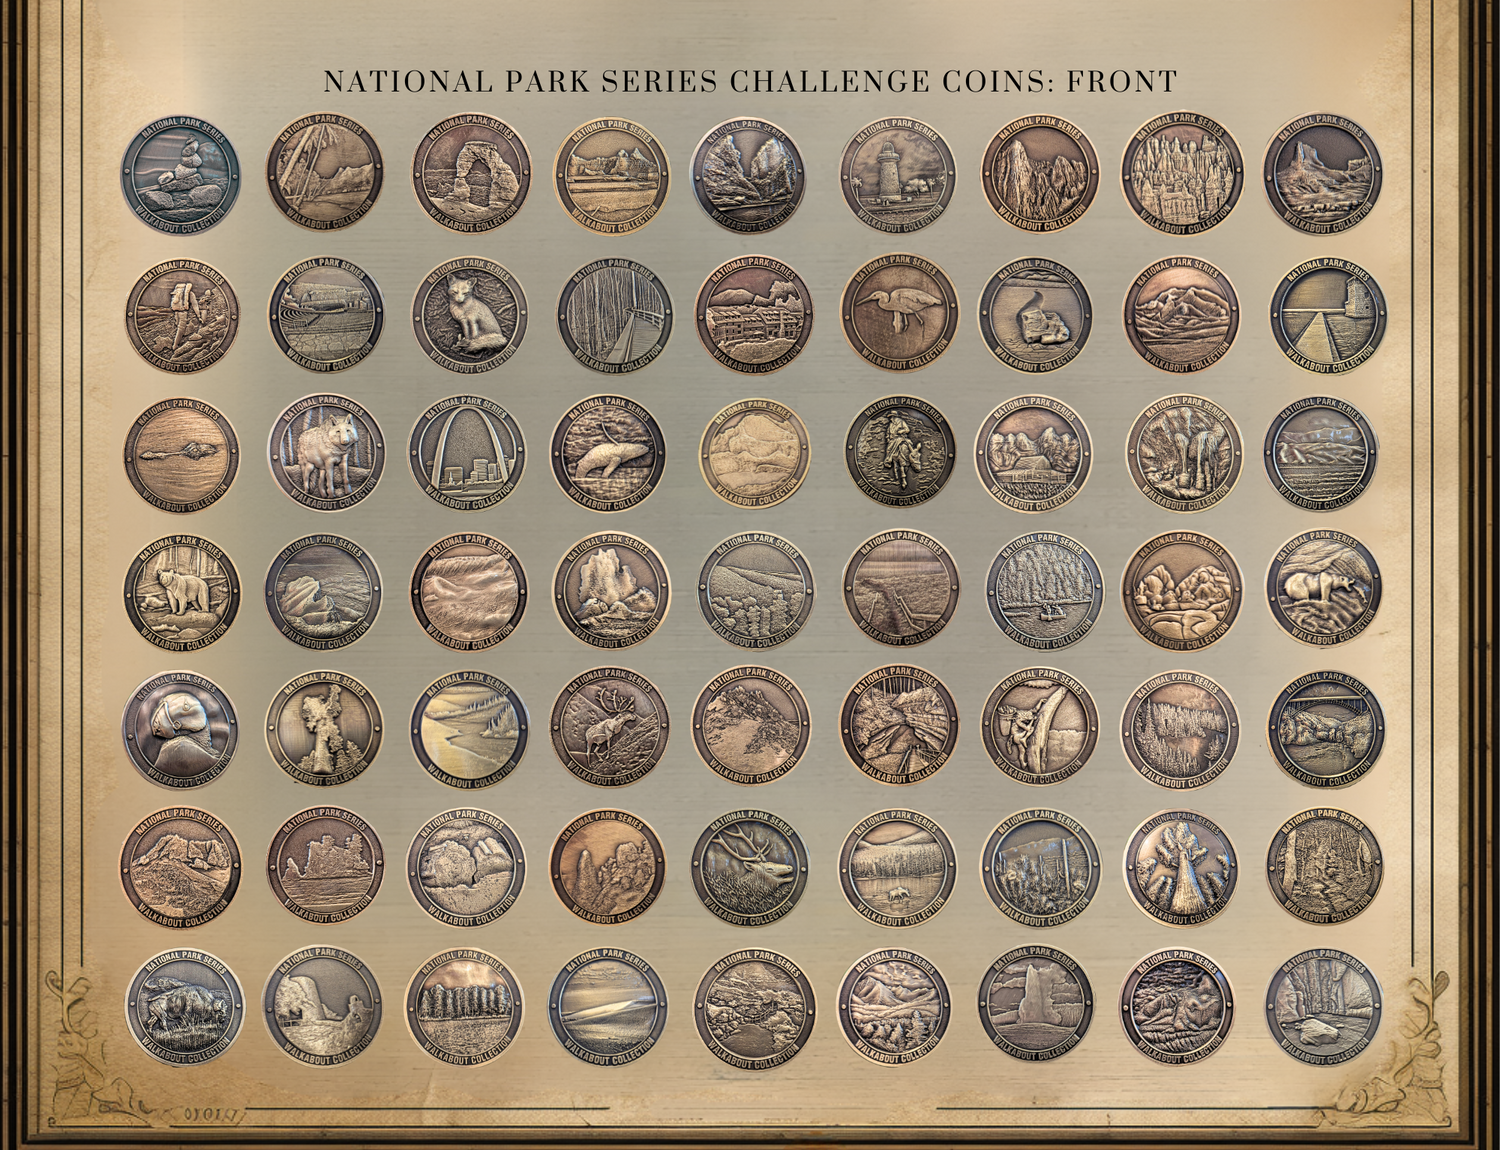 COMPLETE NATIONAL PARKS CHALLENGE COIN SET